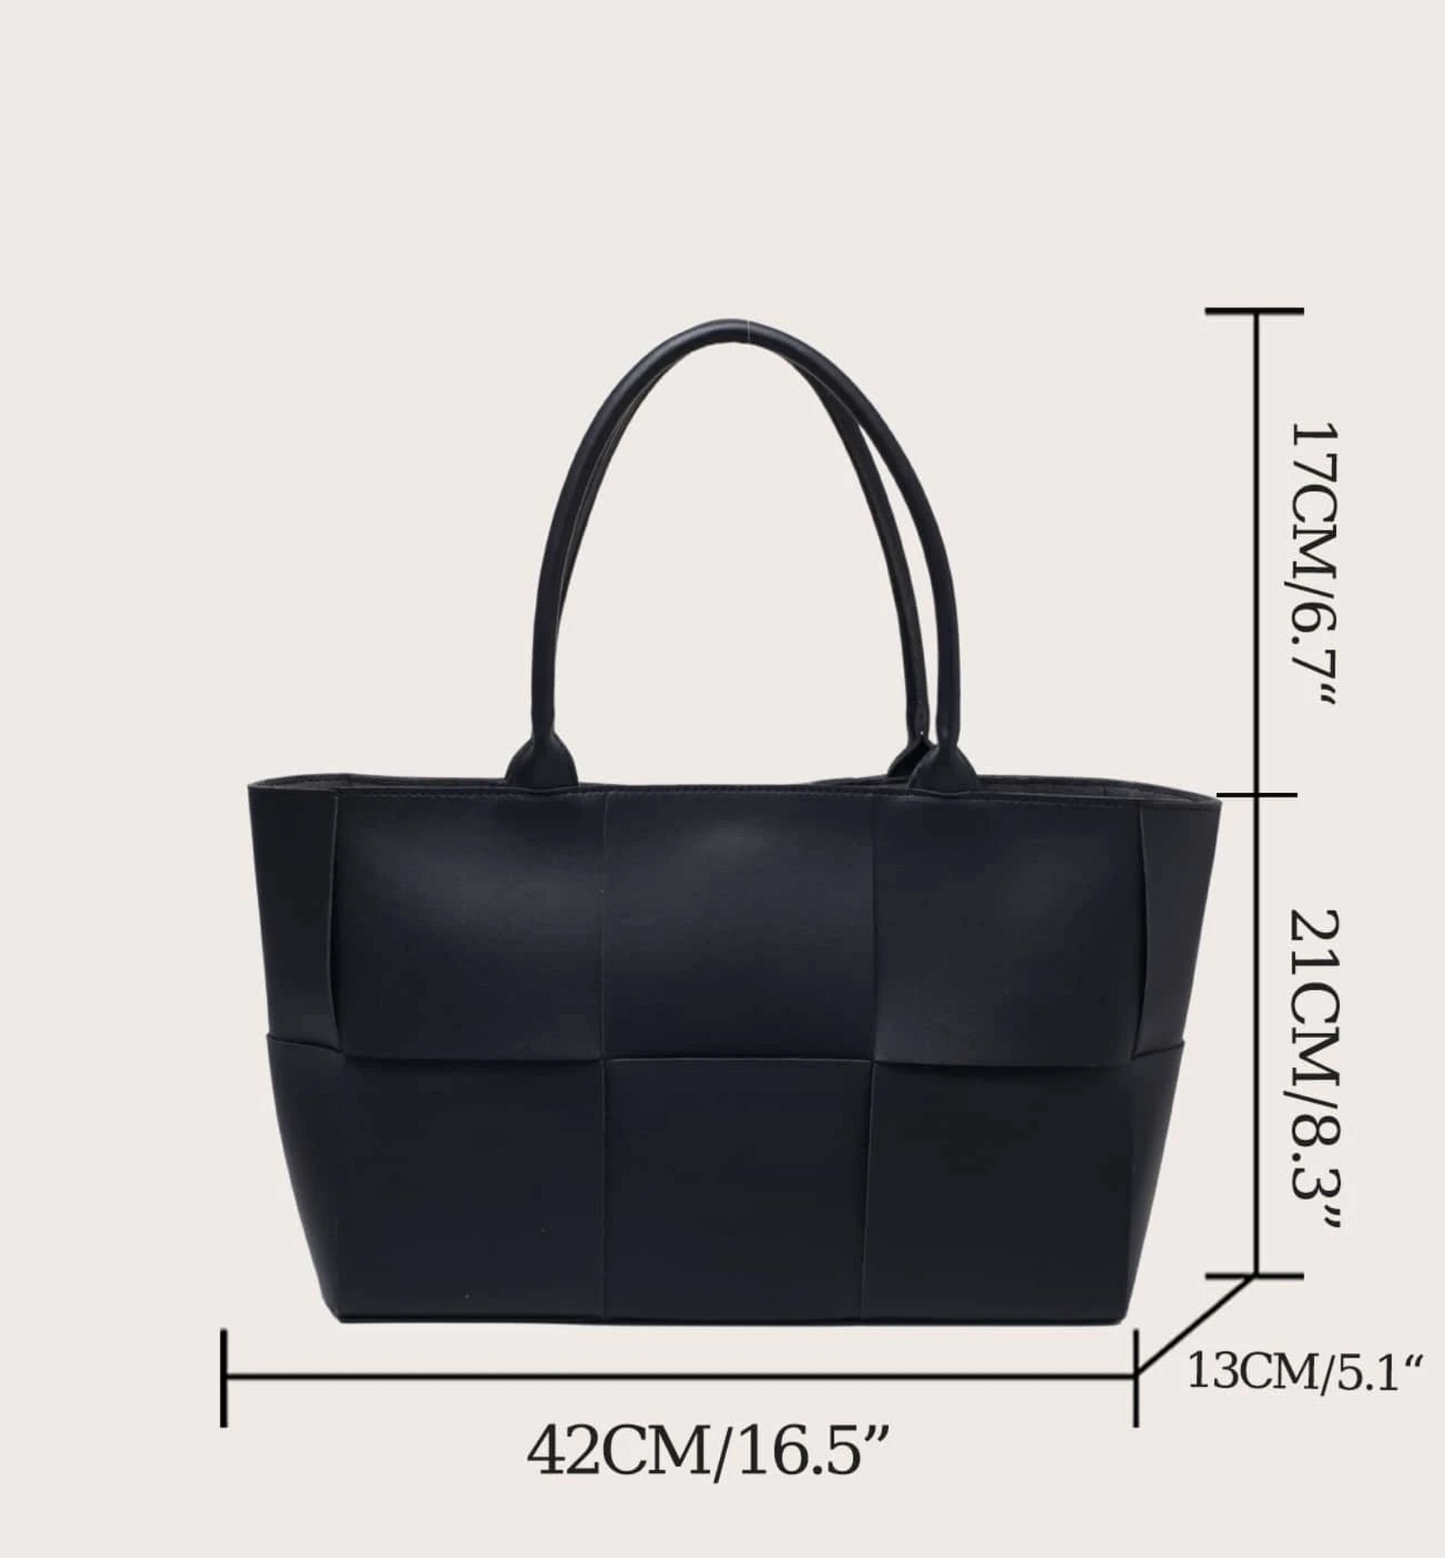 Woven Shoulder Bag with Pouch Inside, Minimalist PU Leather Adjustable Strap Bags, Large Capacity Shoulder Bag